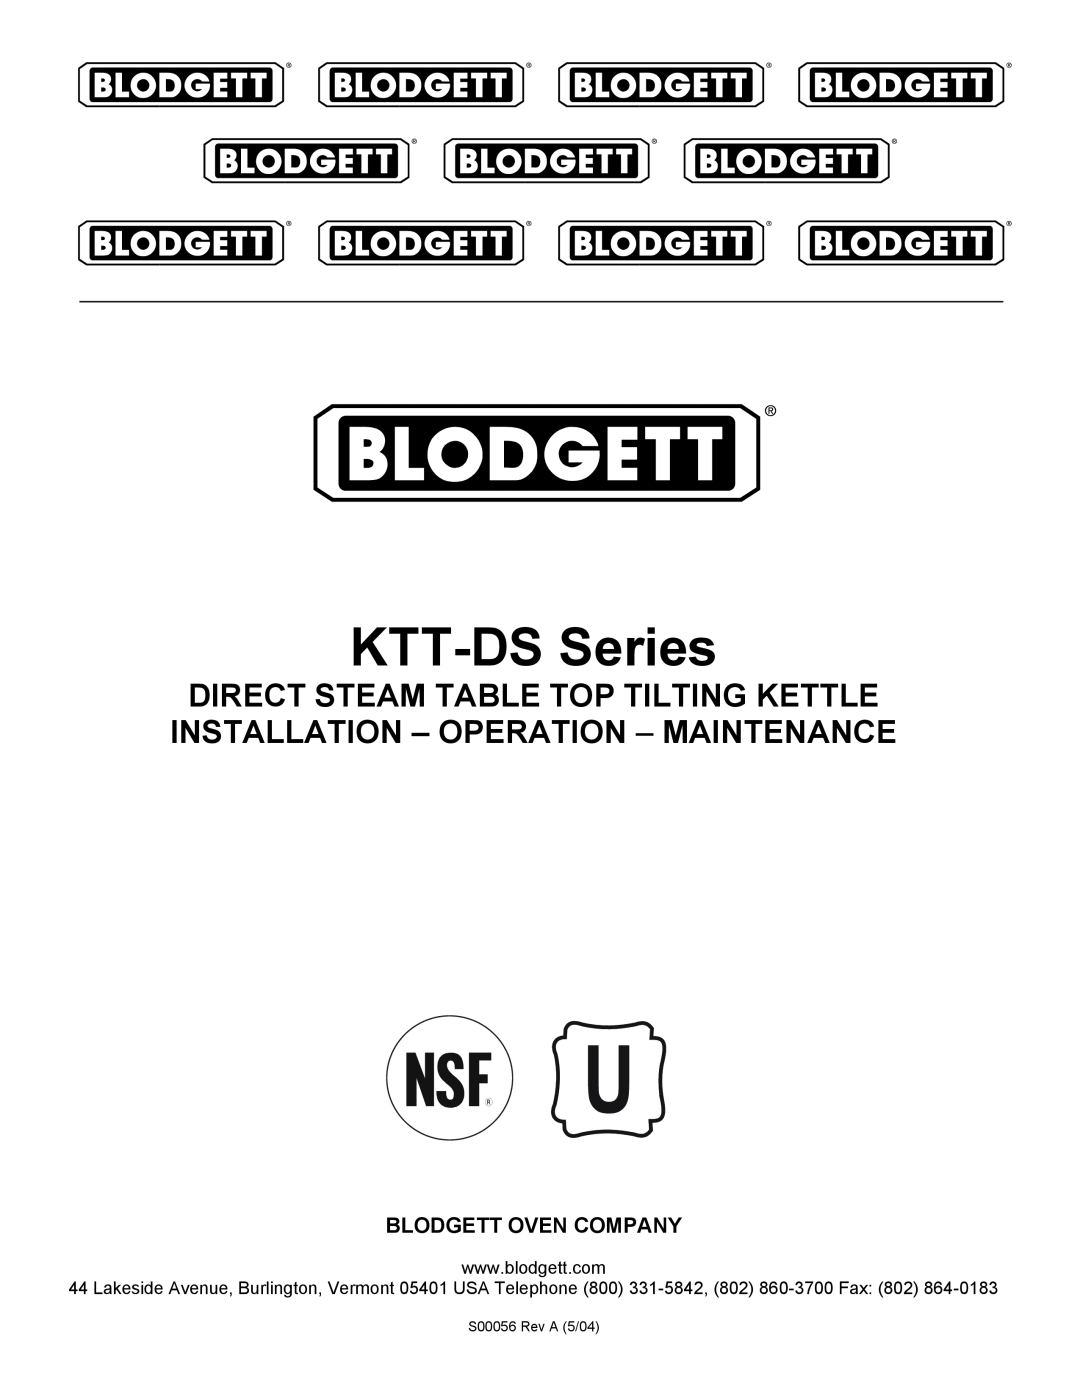 Blodgett manual KTT-DSSeries, Blodgett Oven Company, S00056 Rev1 A 5/04 